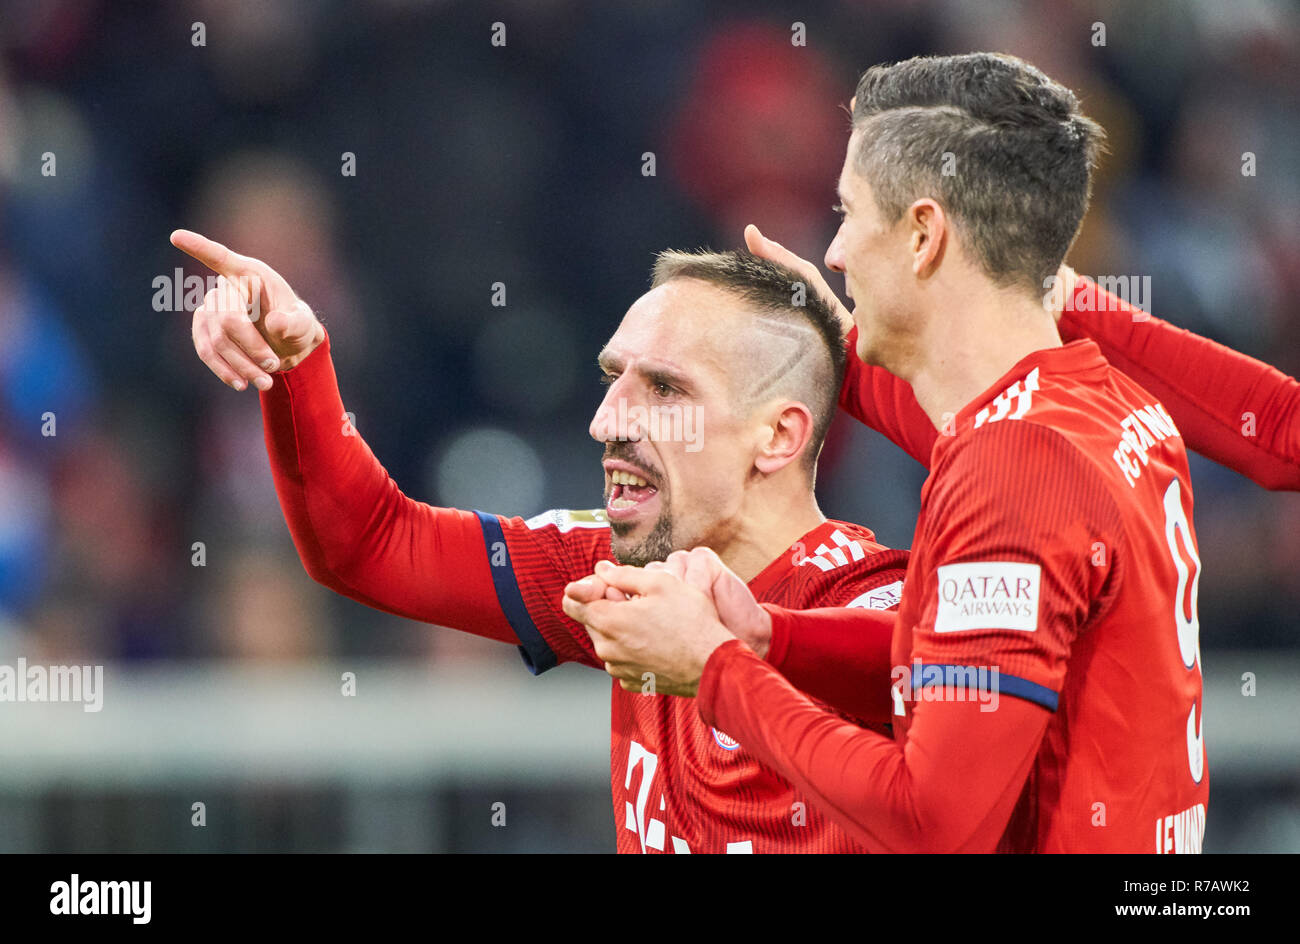 Germany, Berlin. 8th Dec 2018. Franck RIBERY, FCB 7 celebrates his goal for  , happy, laugh, 3-0 with Robert LEWANDOWSKI, FCB 9  FC BAYERN MUNICH - 1.FC NUREMBERG  - DFL REGULATIONS PROHIBIT ANY USE OF PHOTOGRAPHS as IMAGE SEQUENCES and/or QUASI-VIDEO -  1.German Soccer League , Munich, December 08, 2018  Season 2018/2019, matchday 14, FCB, 1.FC Nürnberg © Peter Schatz / Alamy Live News Stock Photo